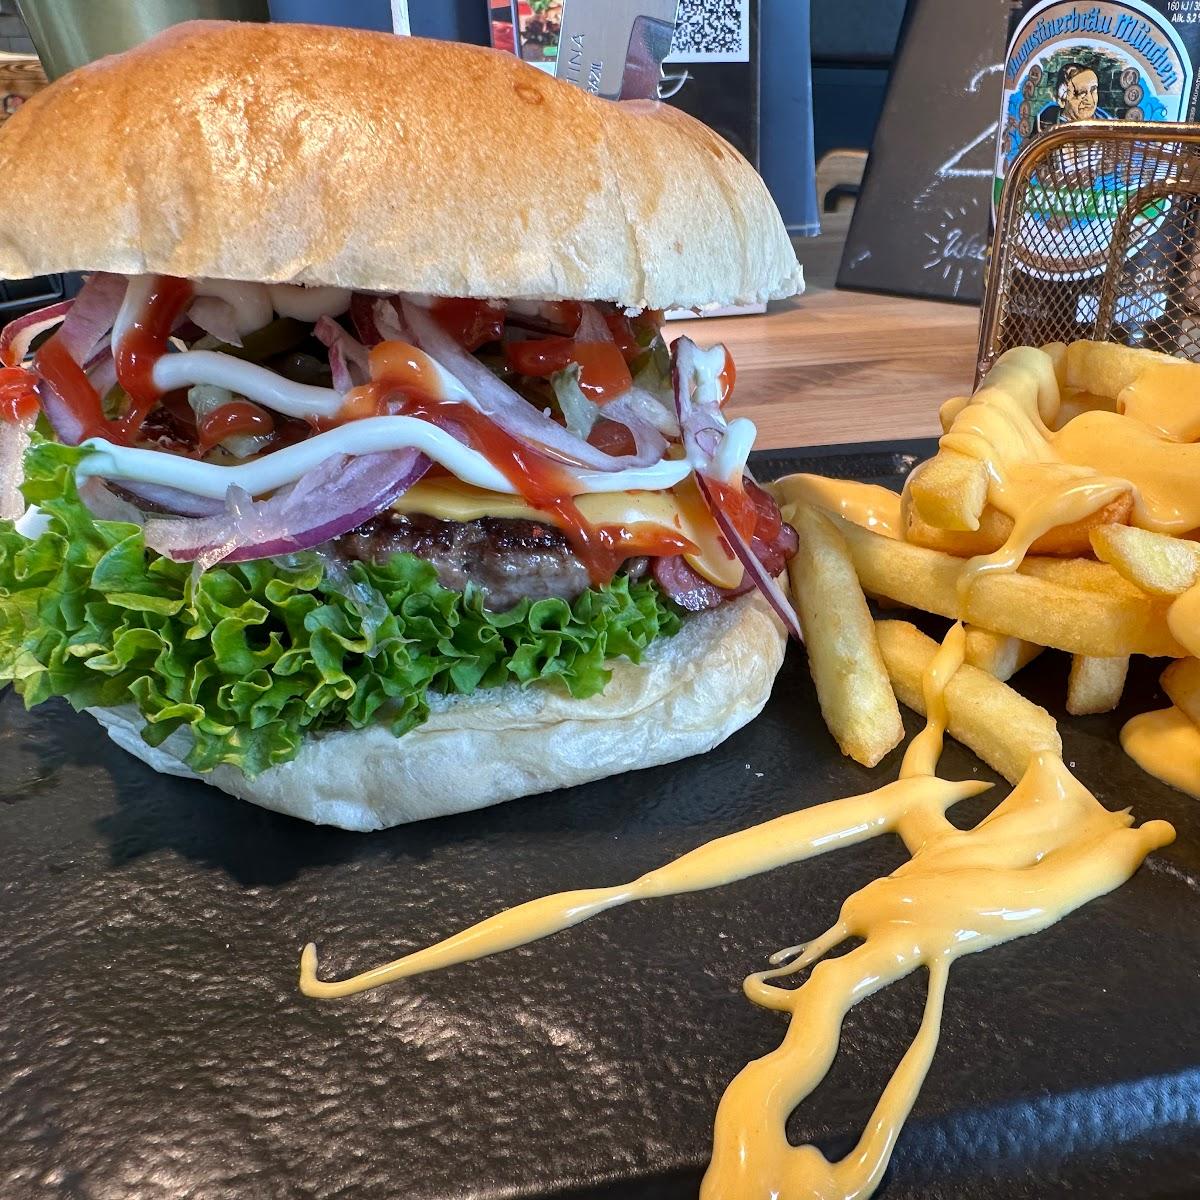 Restaurant "Pit´s Burger" in Backnang